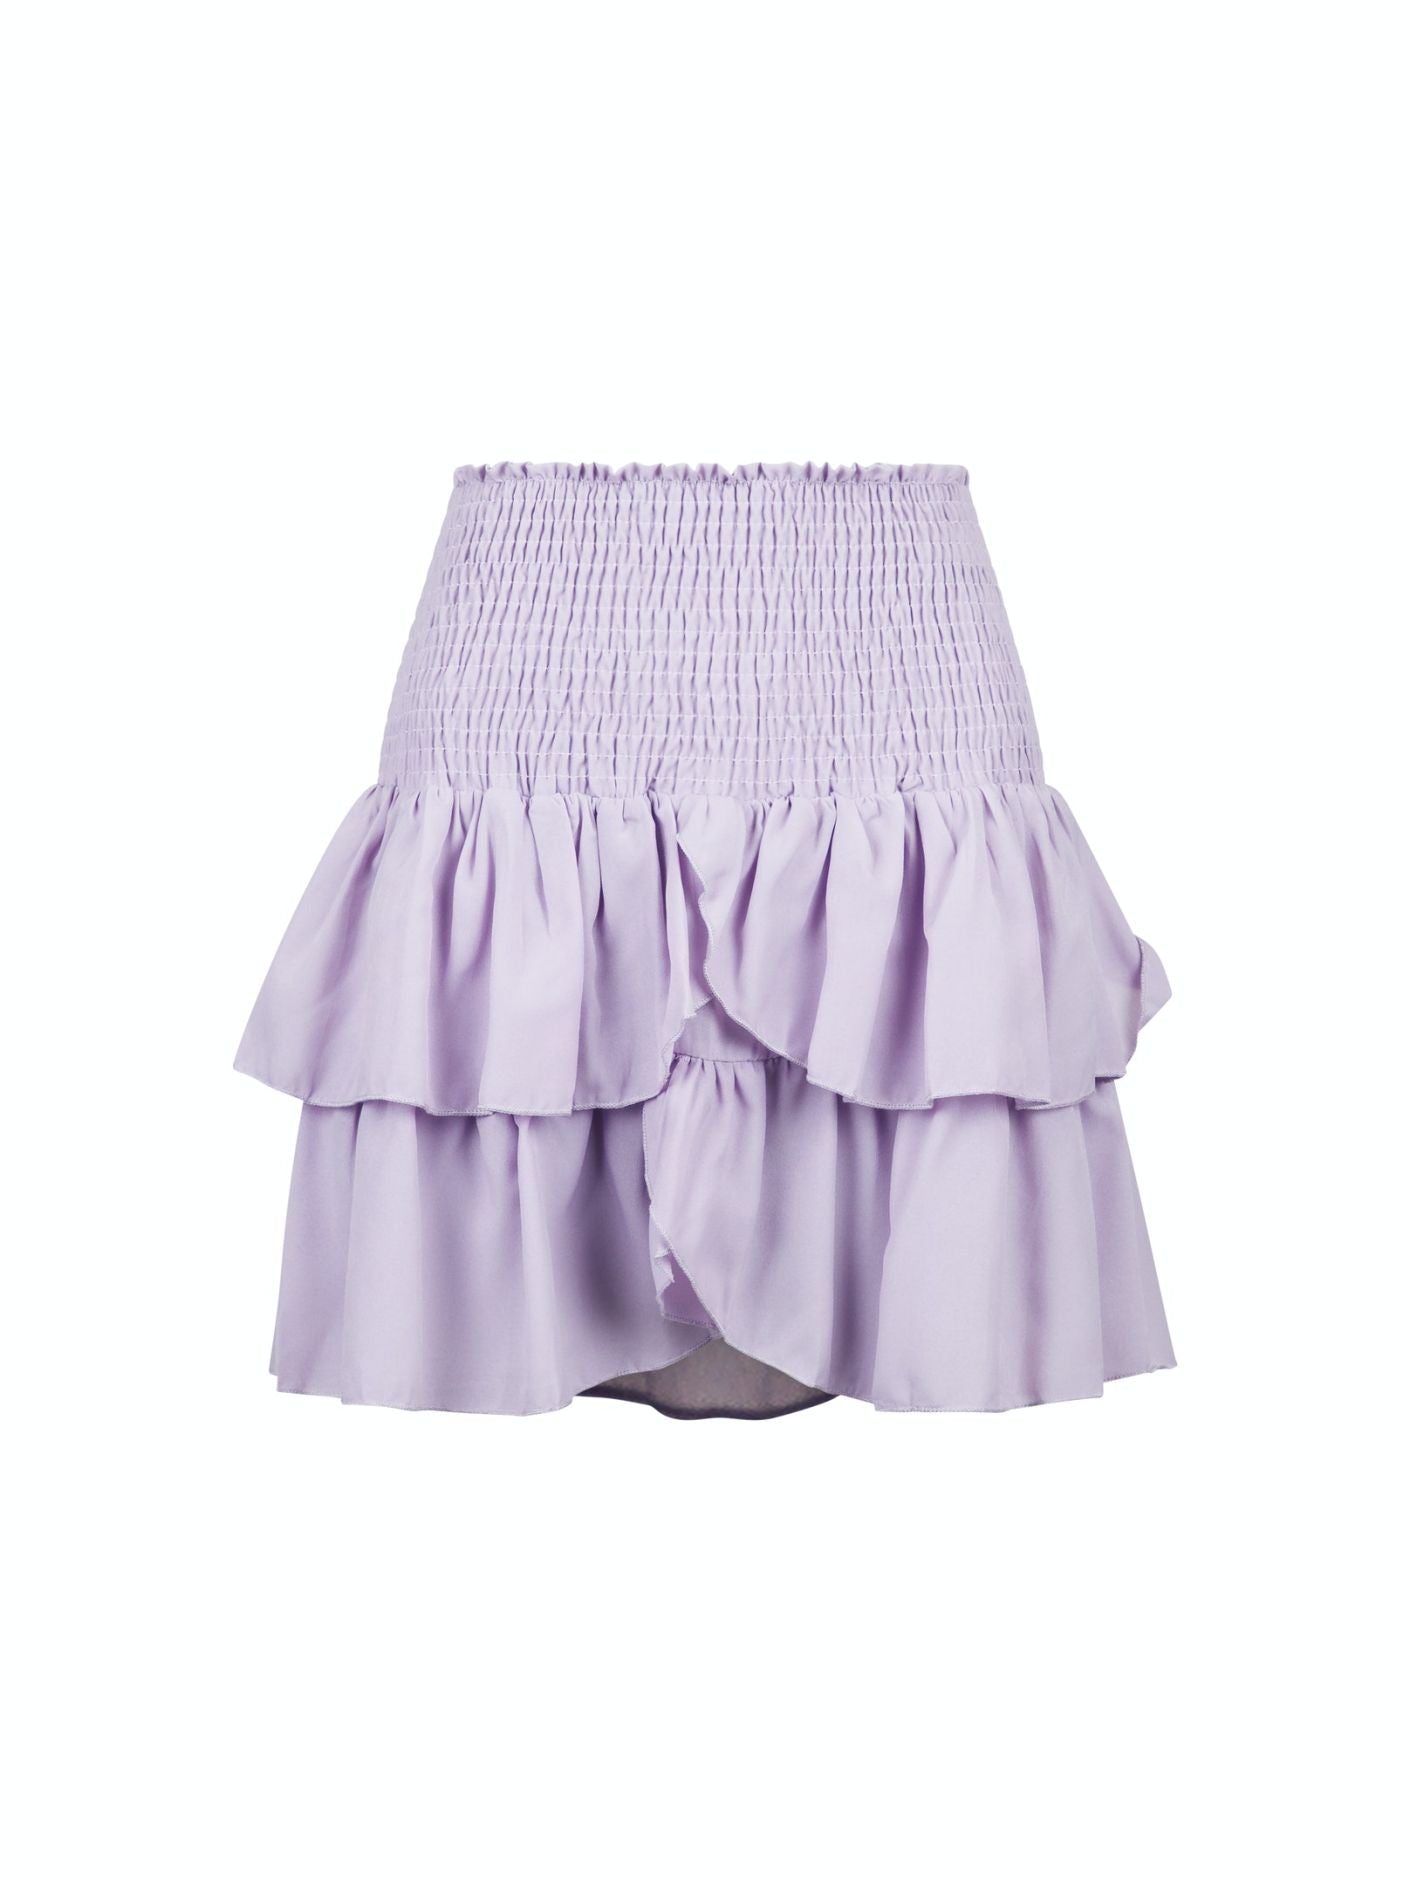 Carin R Skirt Lavender